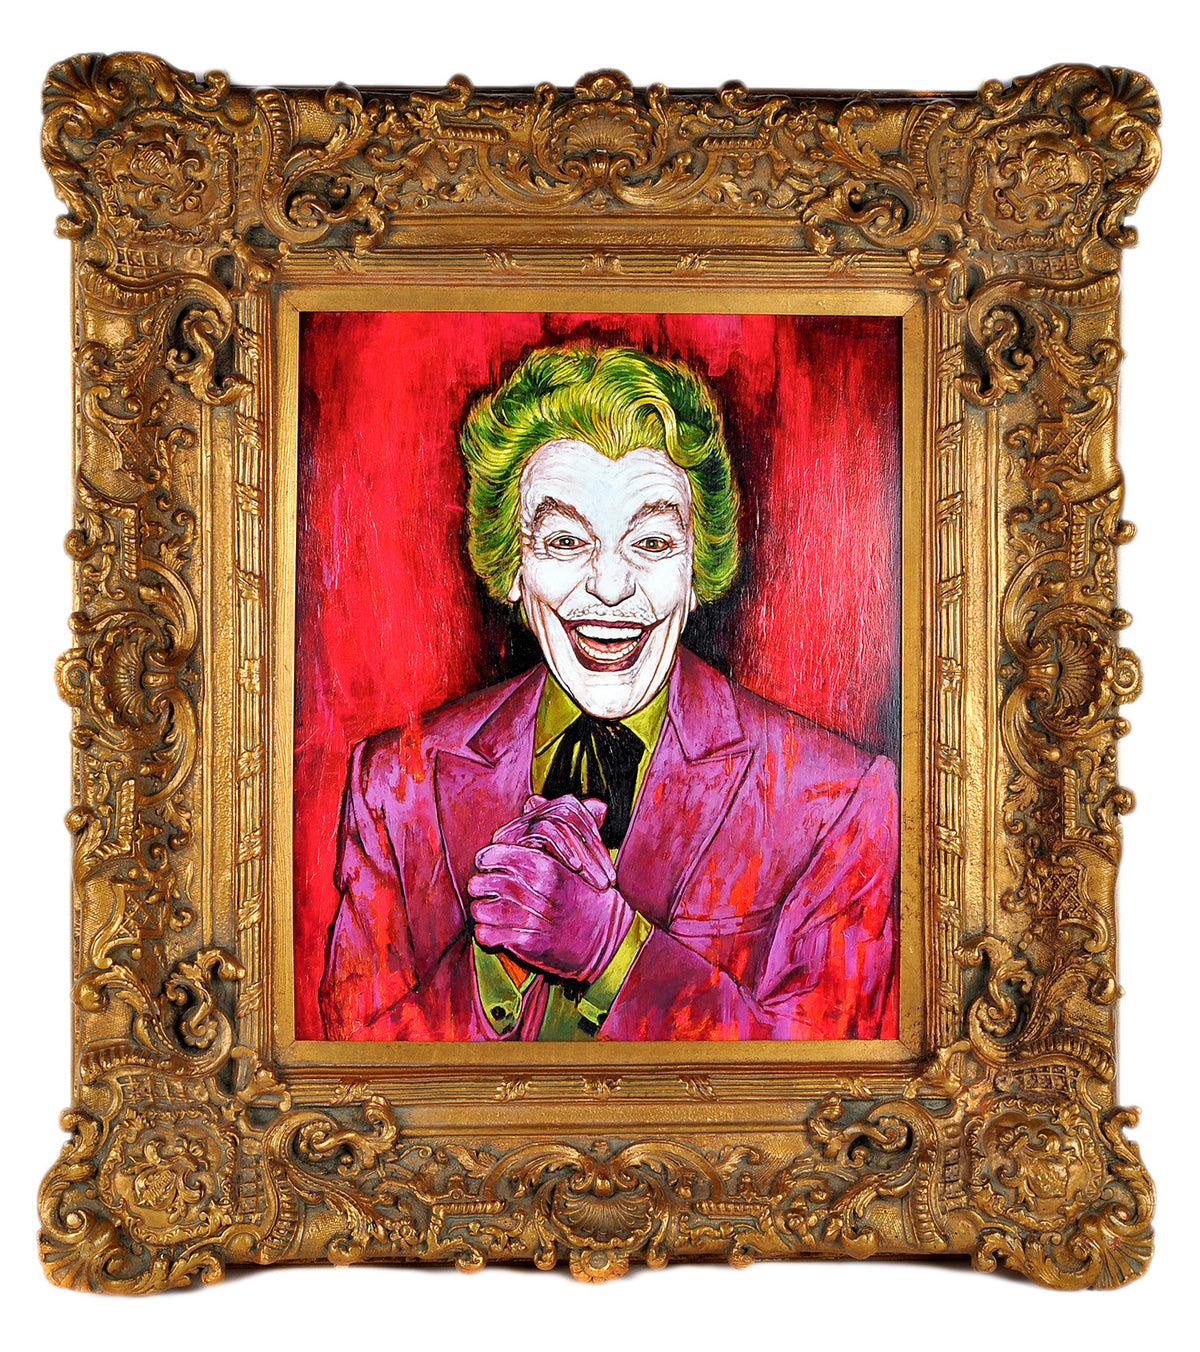 Andrew Houle &quot;The Joker - Cesar Romero&quot; - Original Oil Painting on Wood in Frame